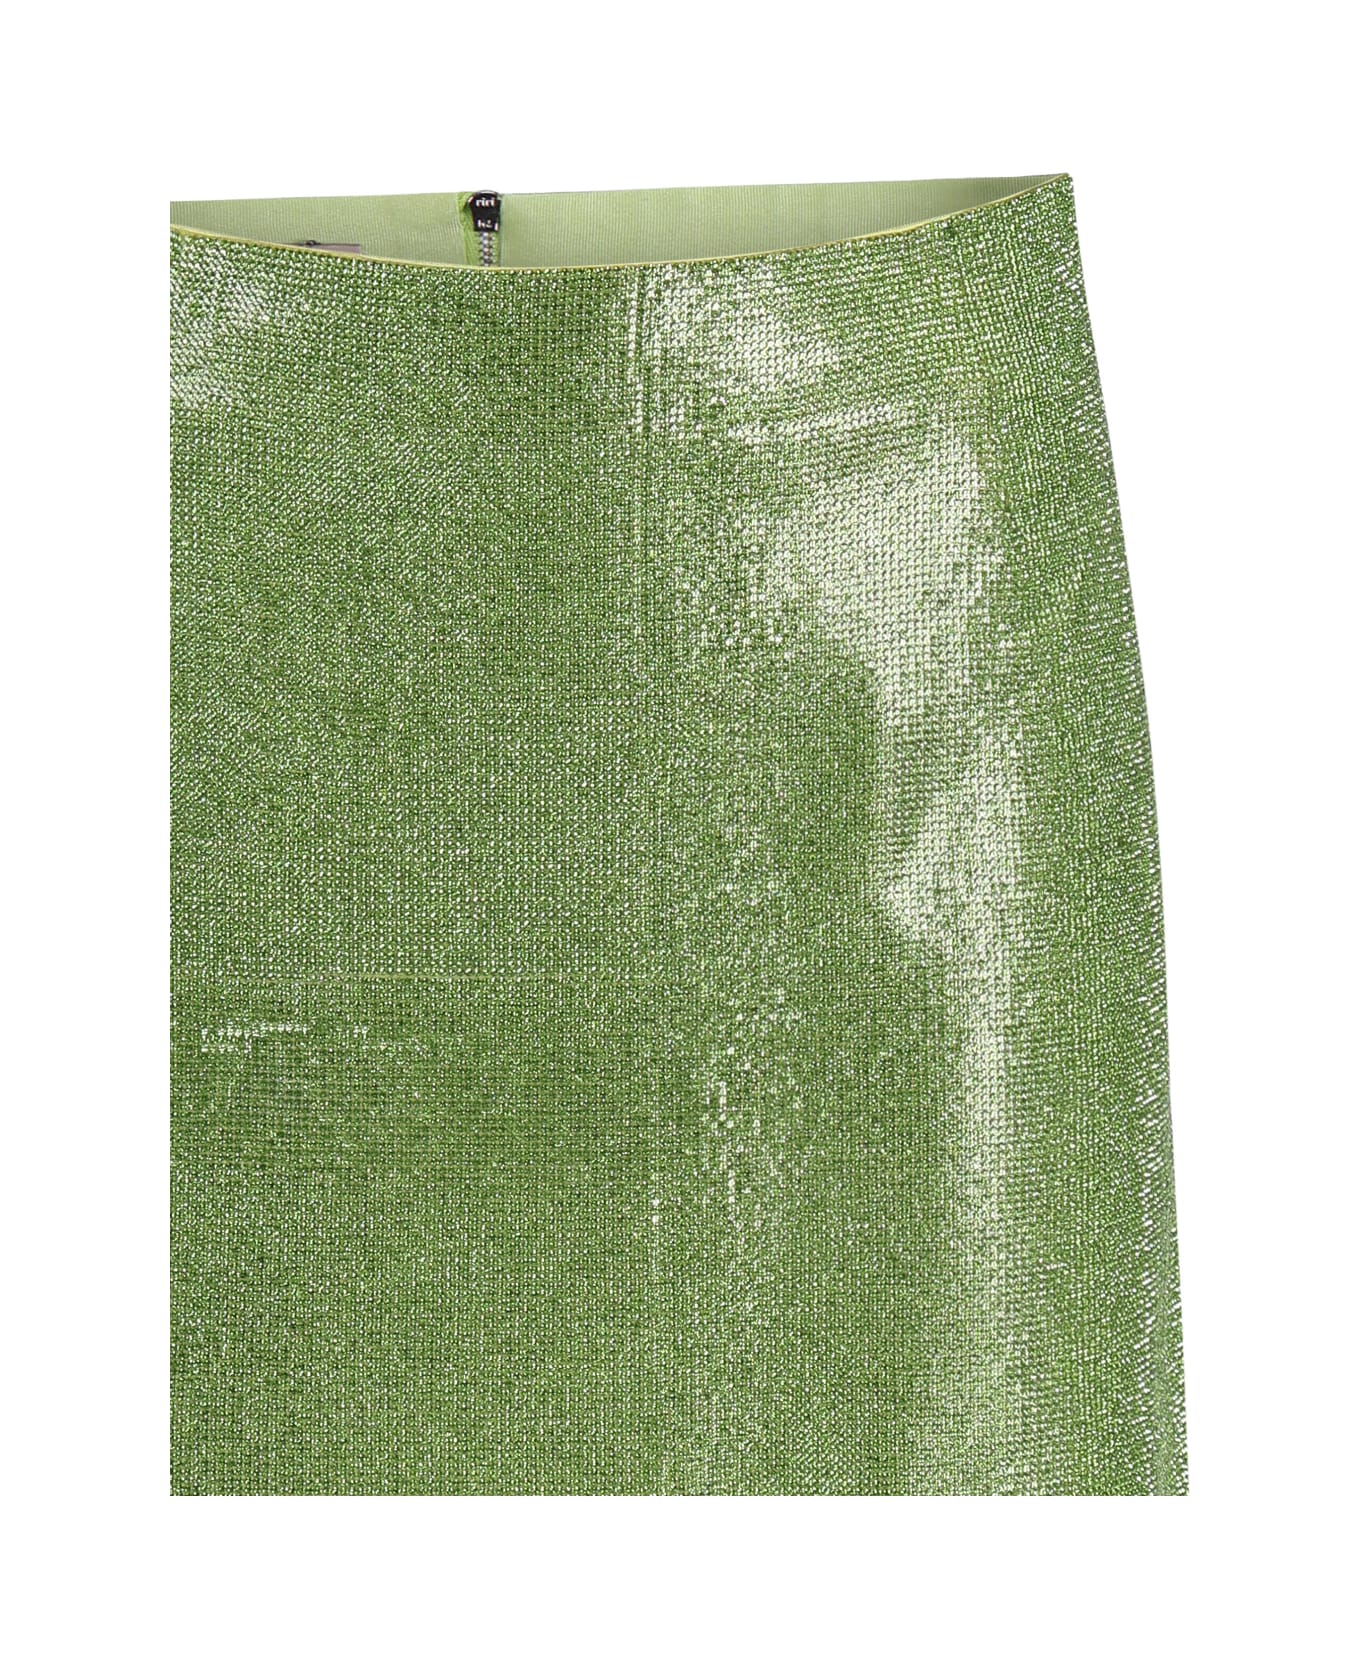 Nué Camille Skirt - Green スカート